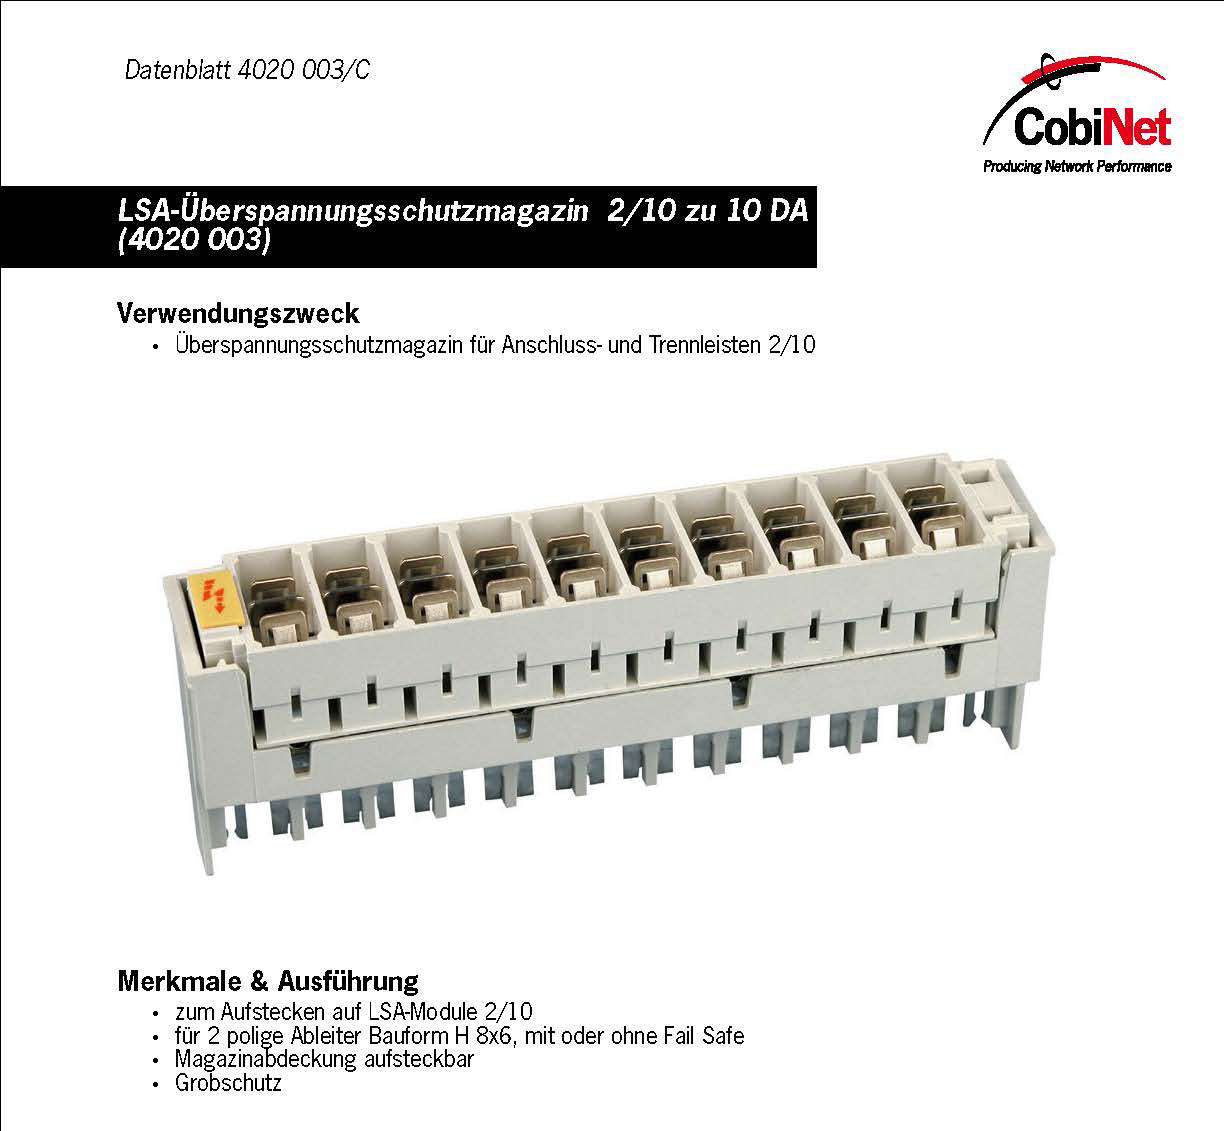 CobiTel模块系列产品-LSA-保安排-Datenblatt 4020 003_C图1